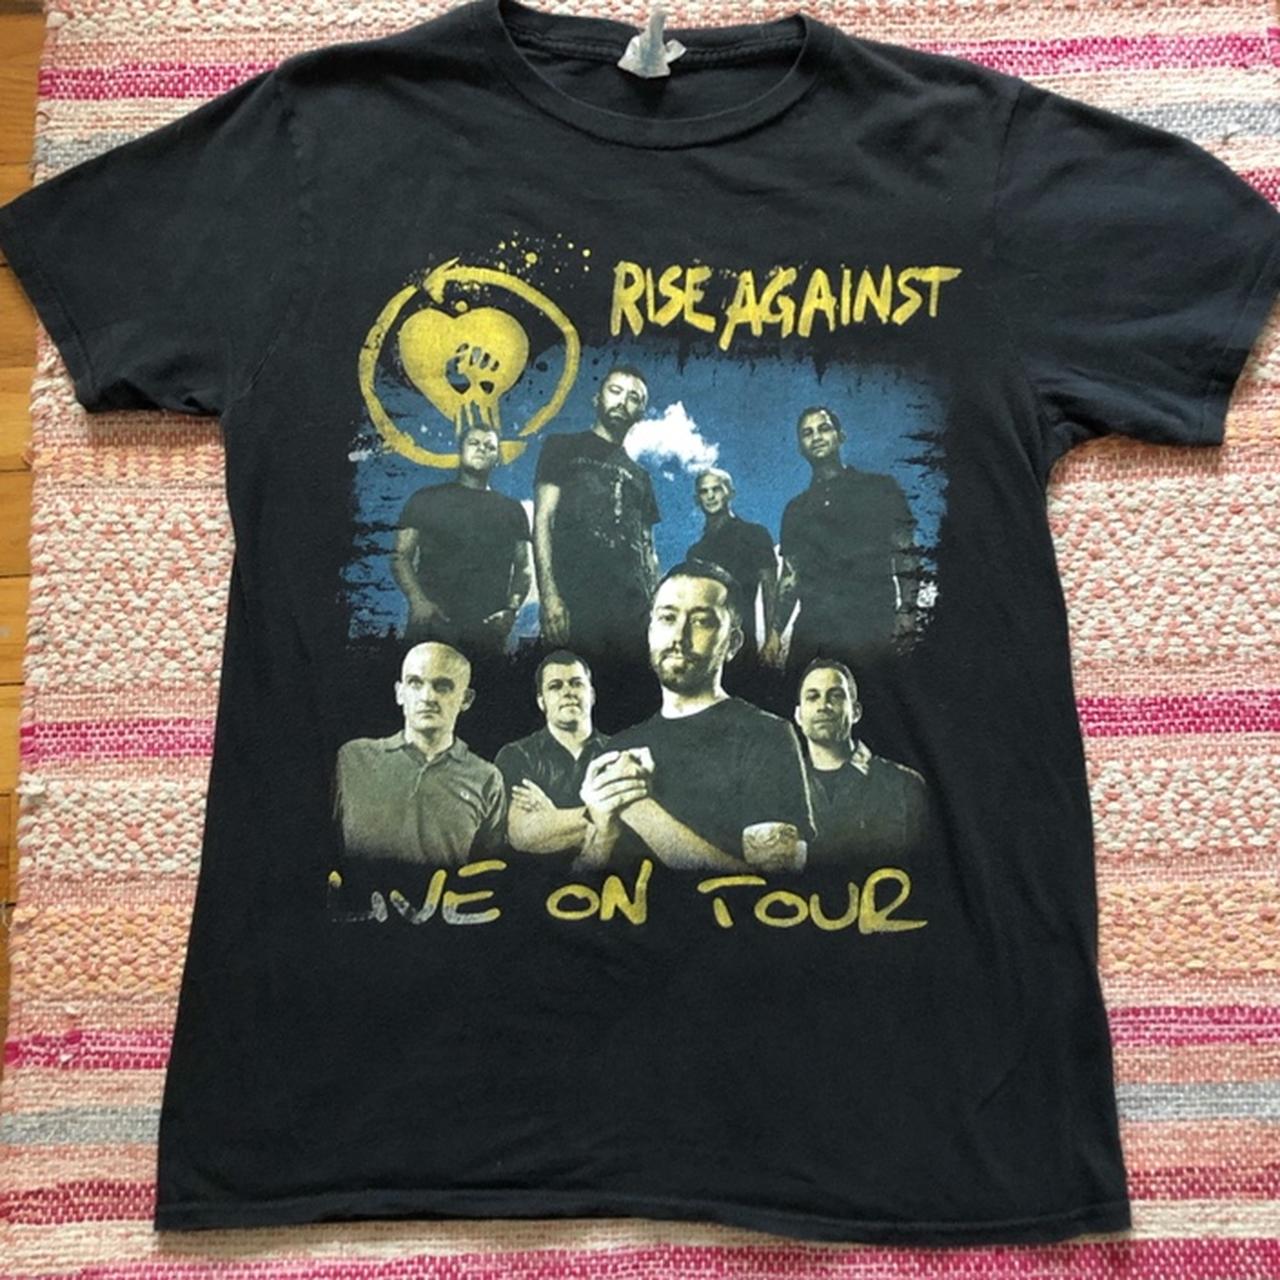 Rise Against Live on Tour T Shirt, Size:...